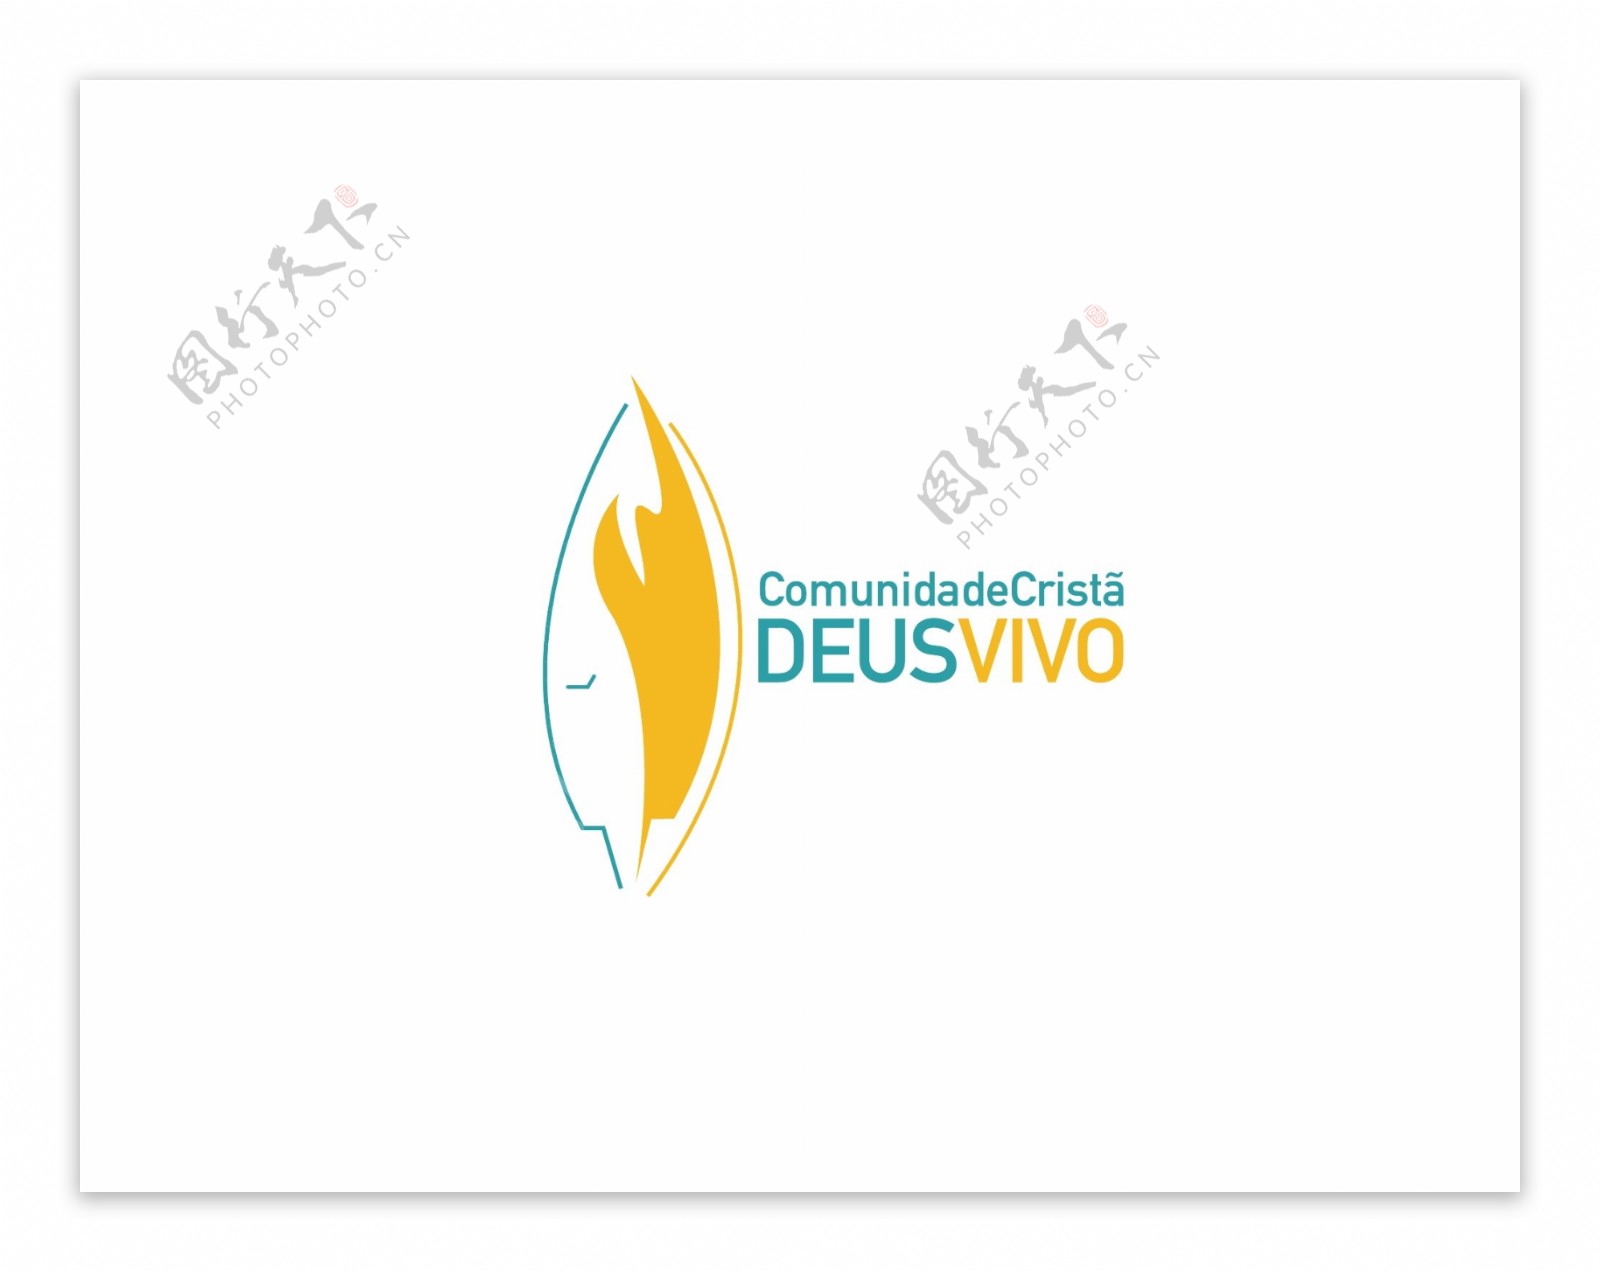 ComunidadeDeusVivologo设计欣赏ComunidadeDeusVivo服务公司标志下载标志设计欣赏